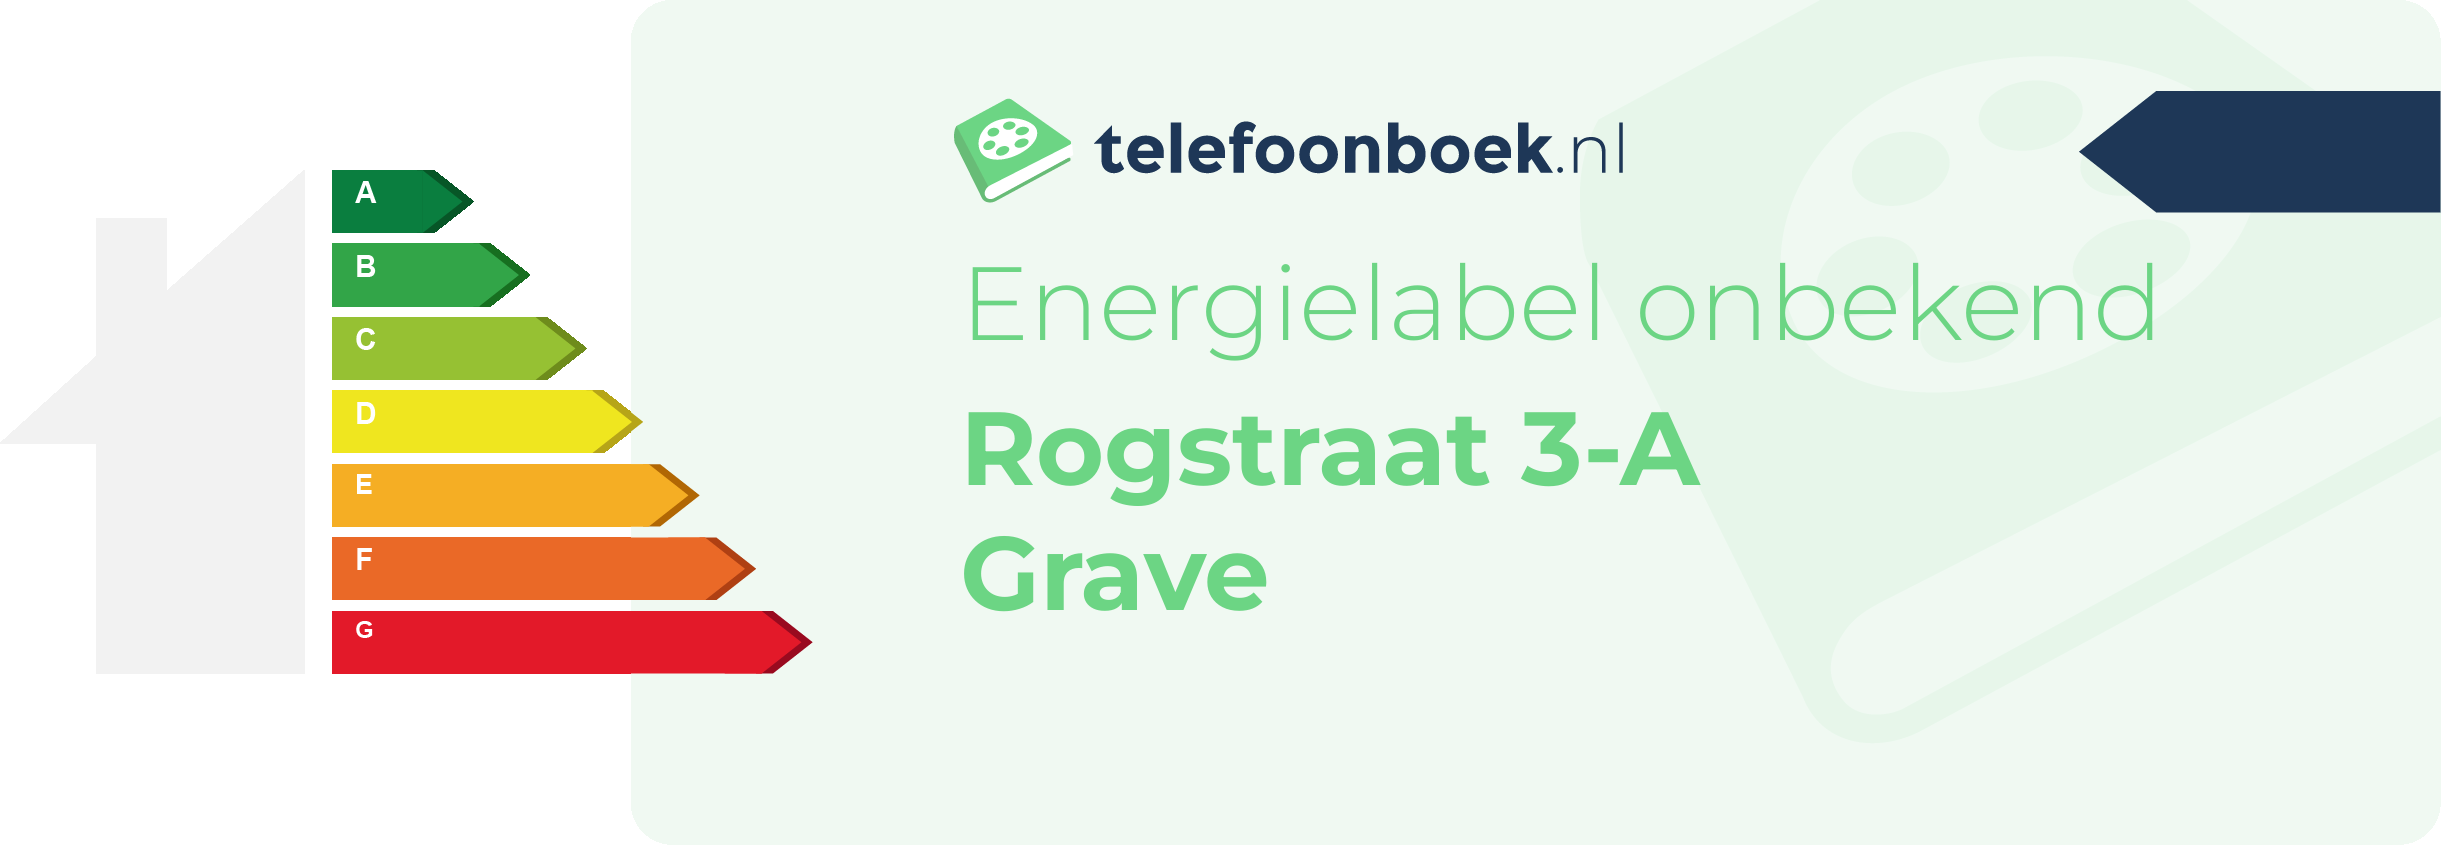 Energielabel Rogstraat 3-A Grave